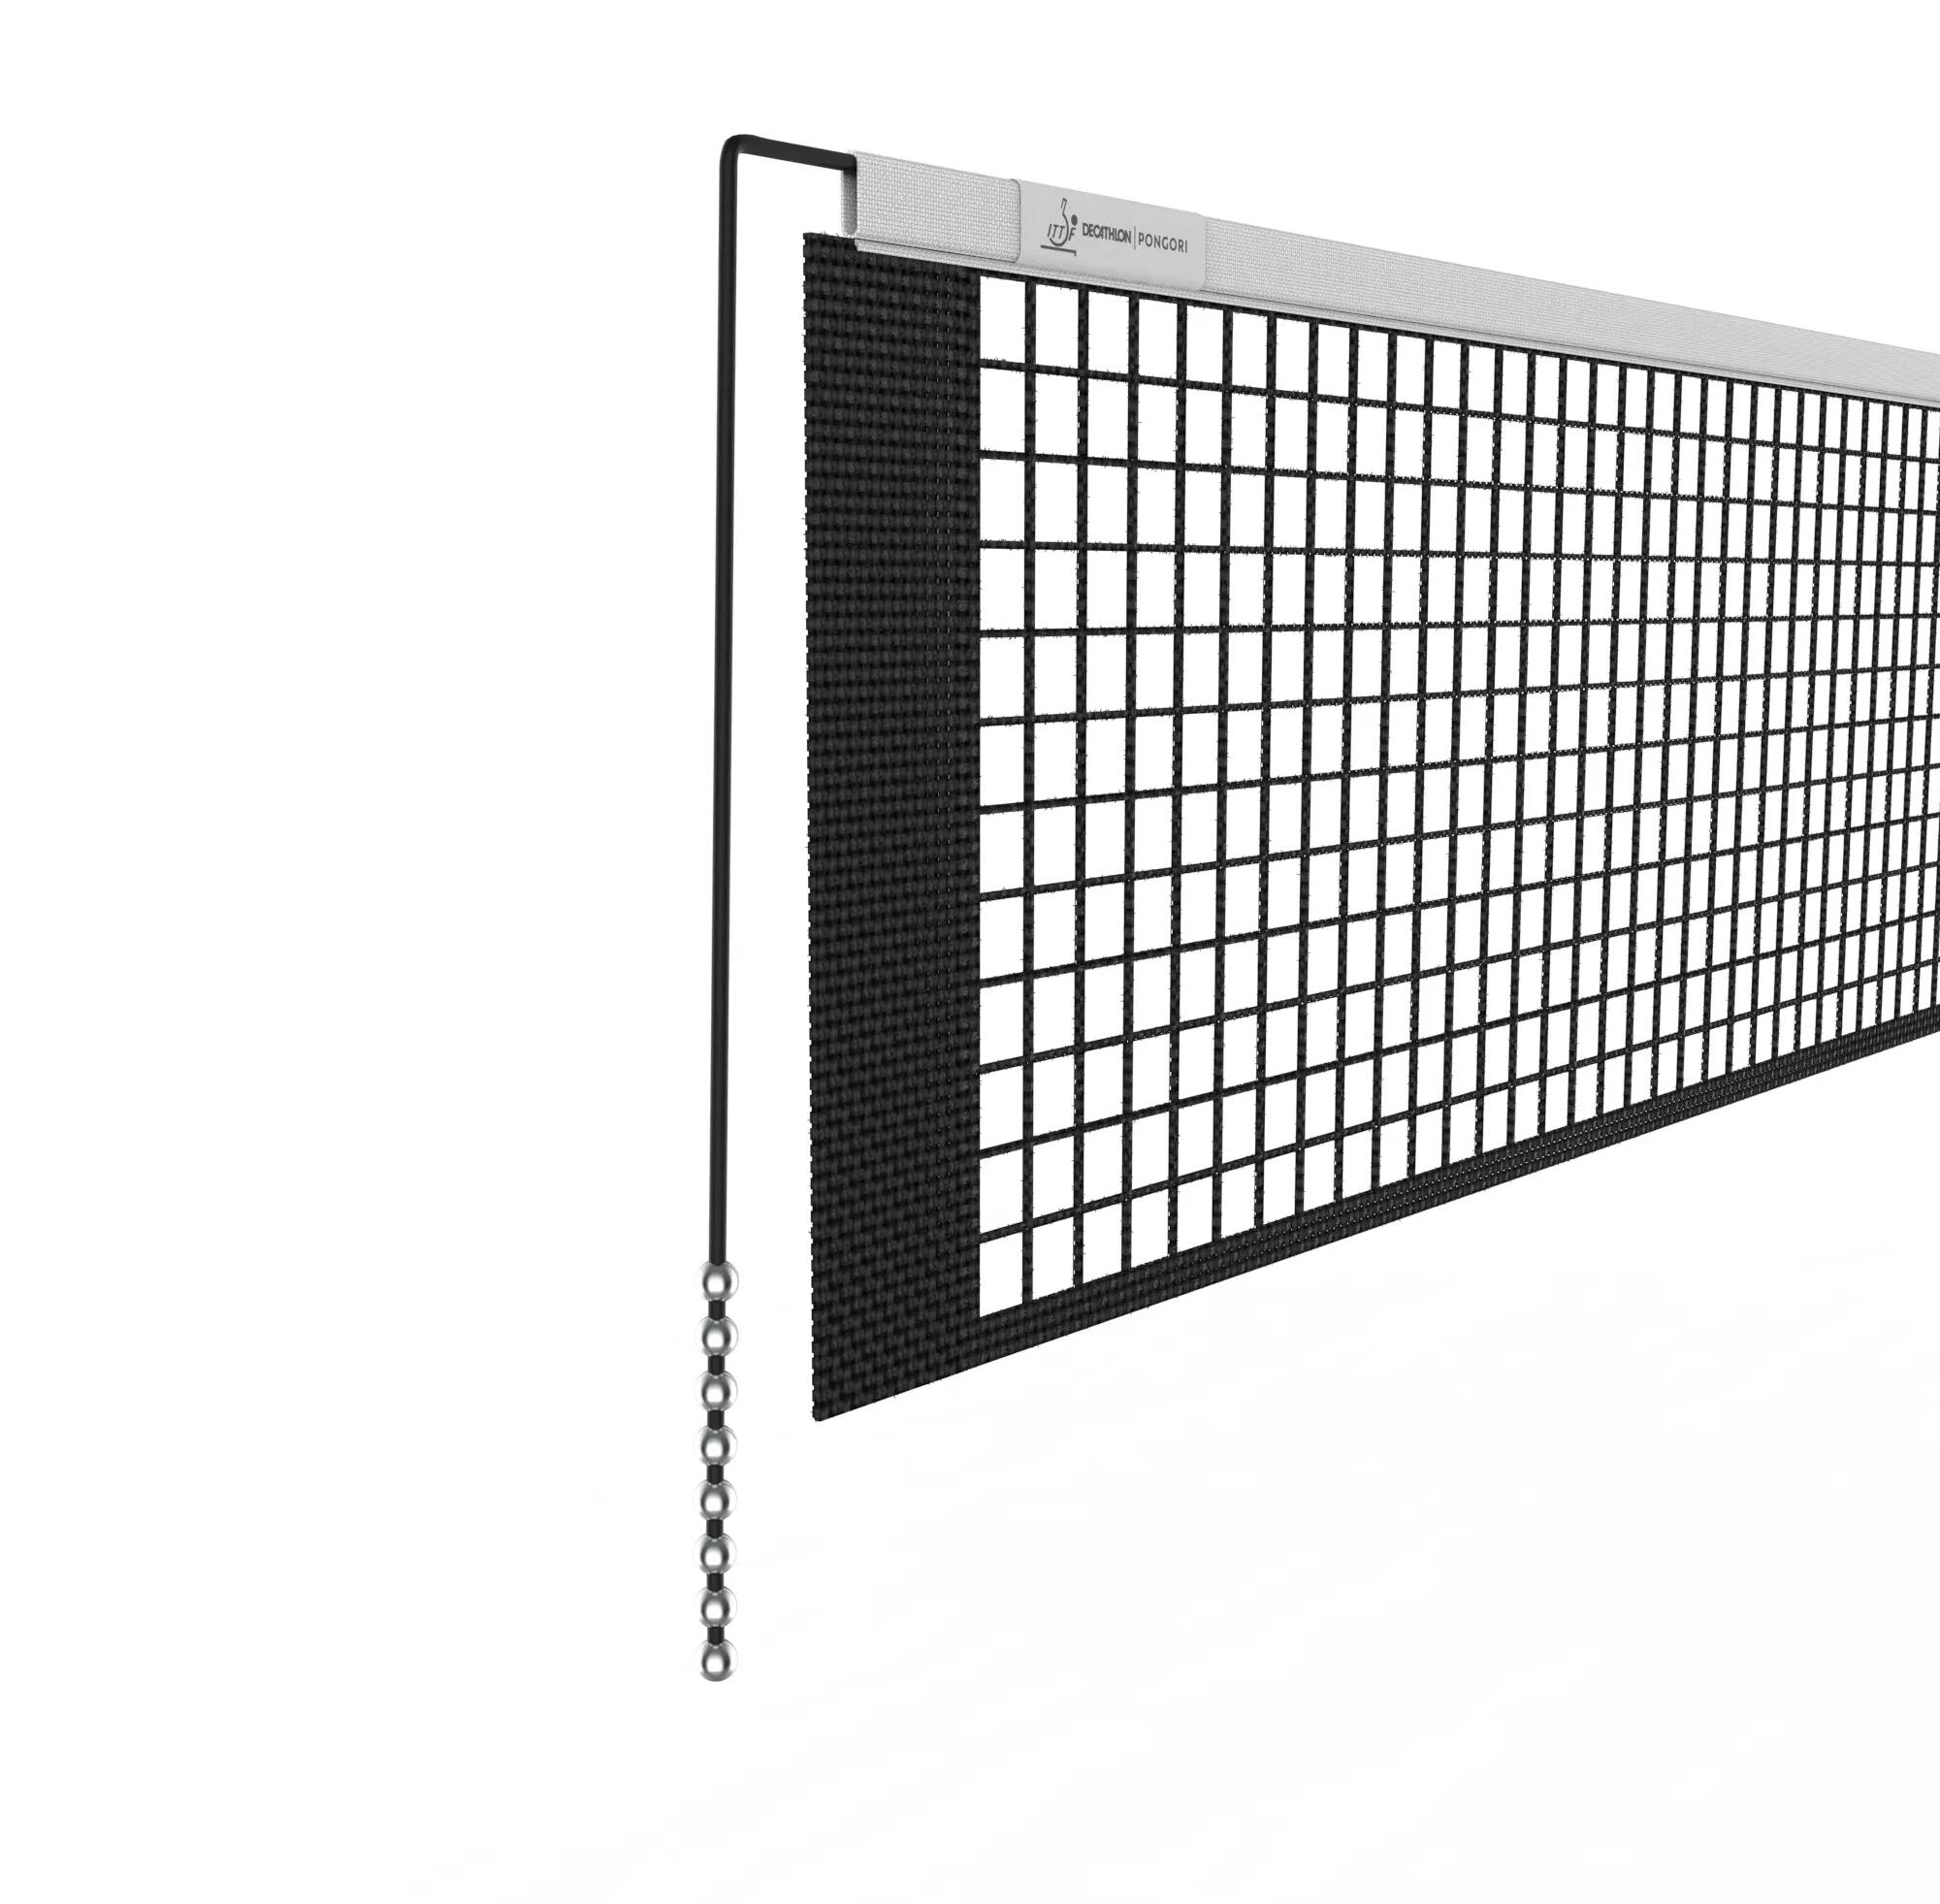 Table tennis table net